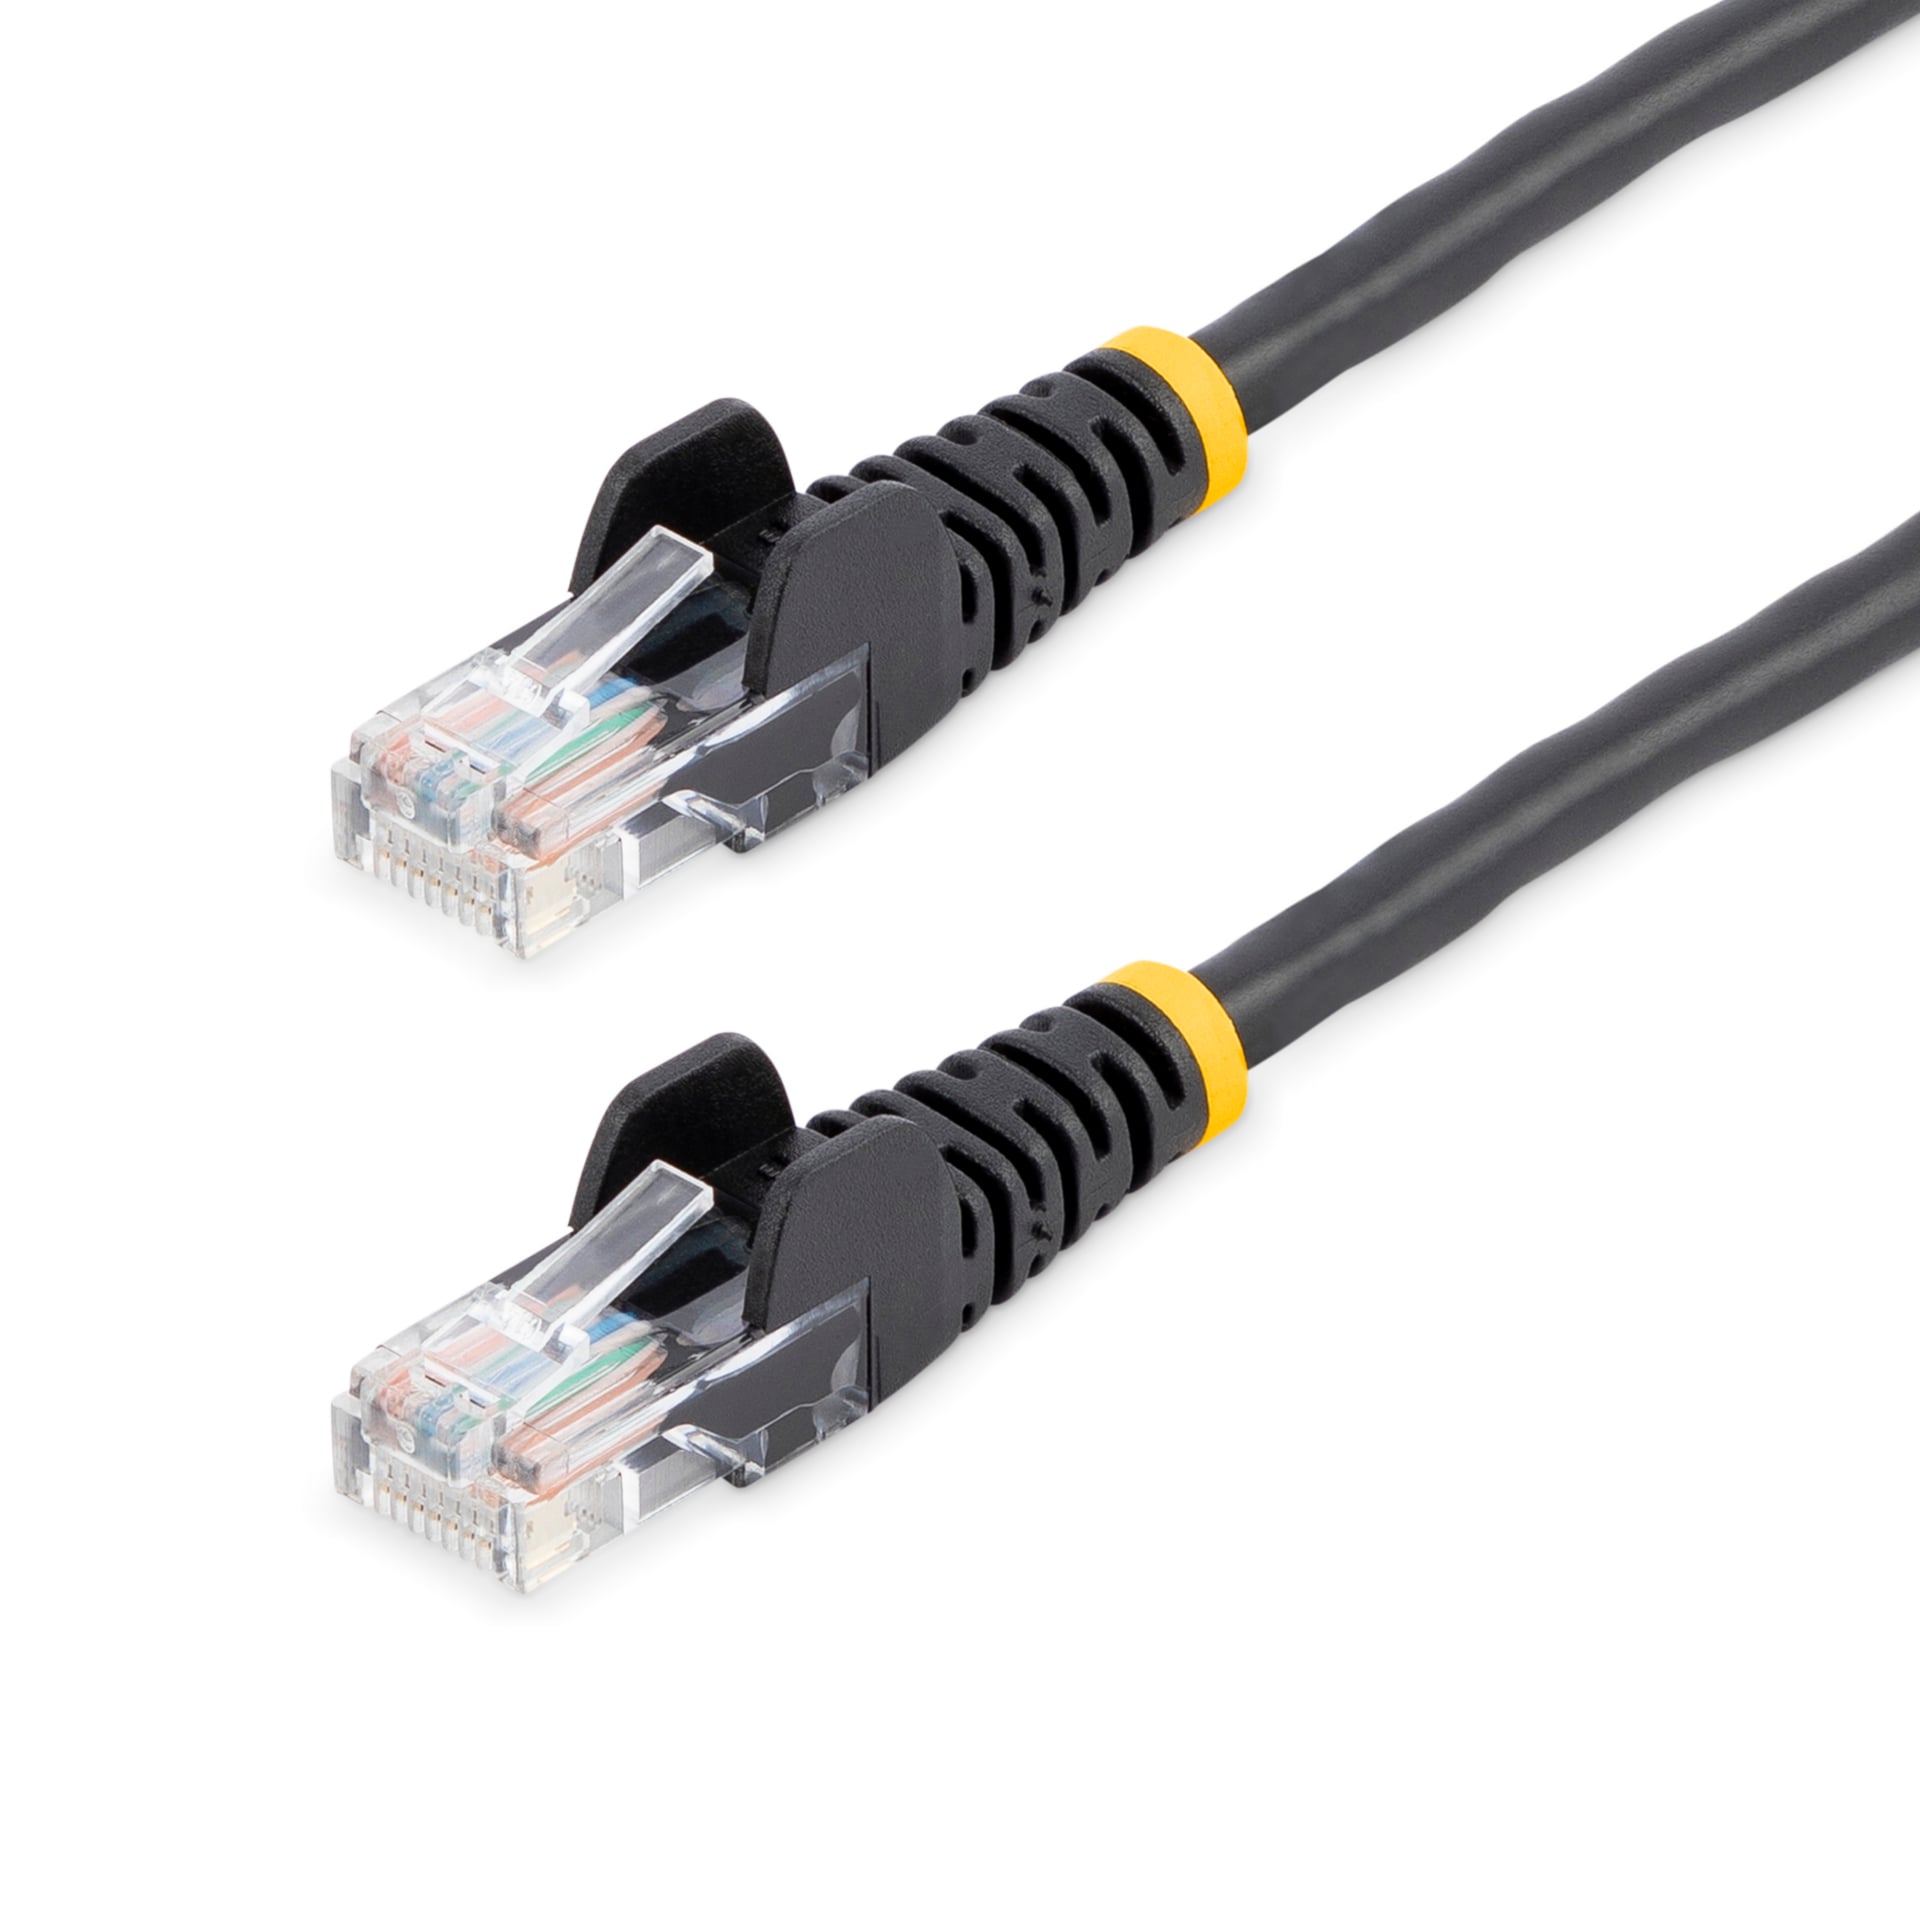 StarTech.com Cat5e Ethernet Cable 15 ft Black - Cat 5e Snagless Patch Cable